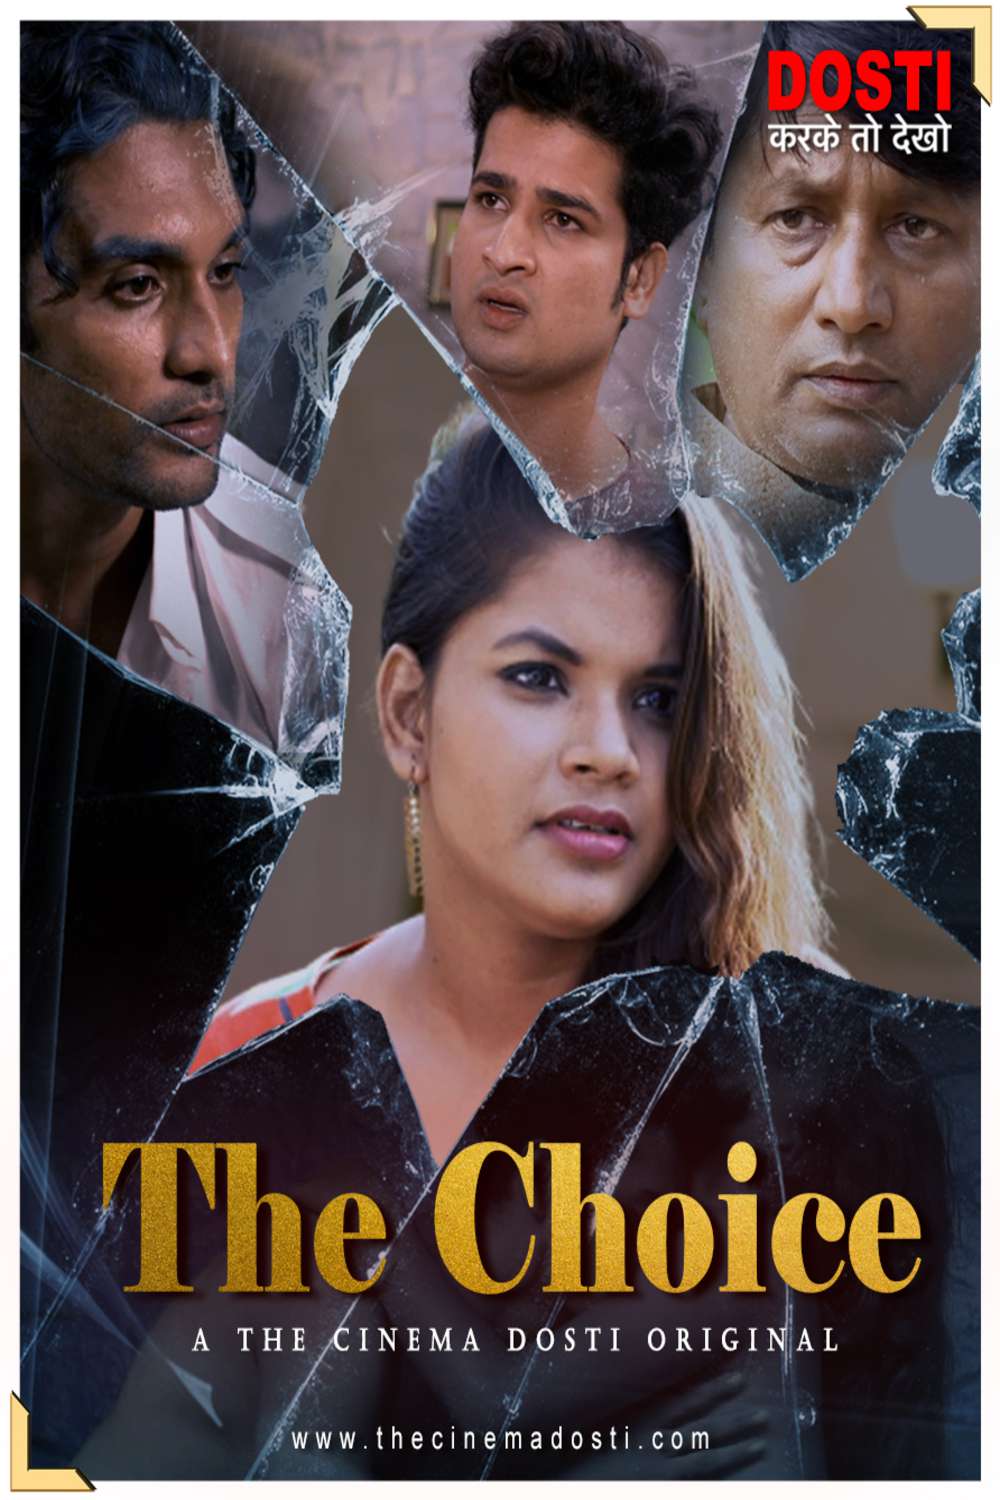 The Choice 2020 Cinema Dosti